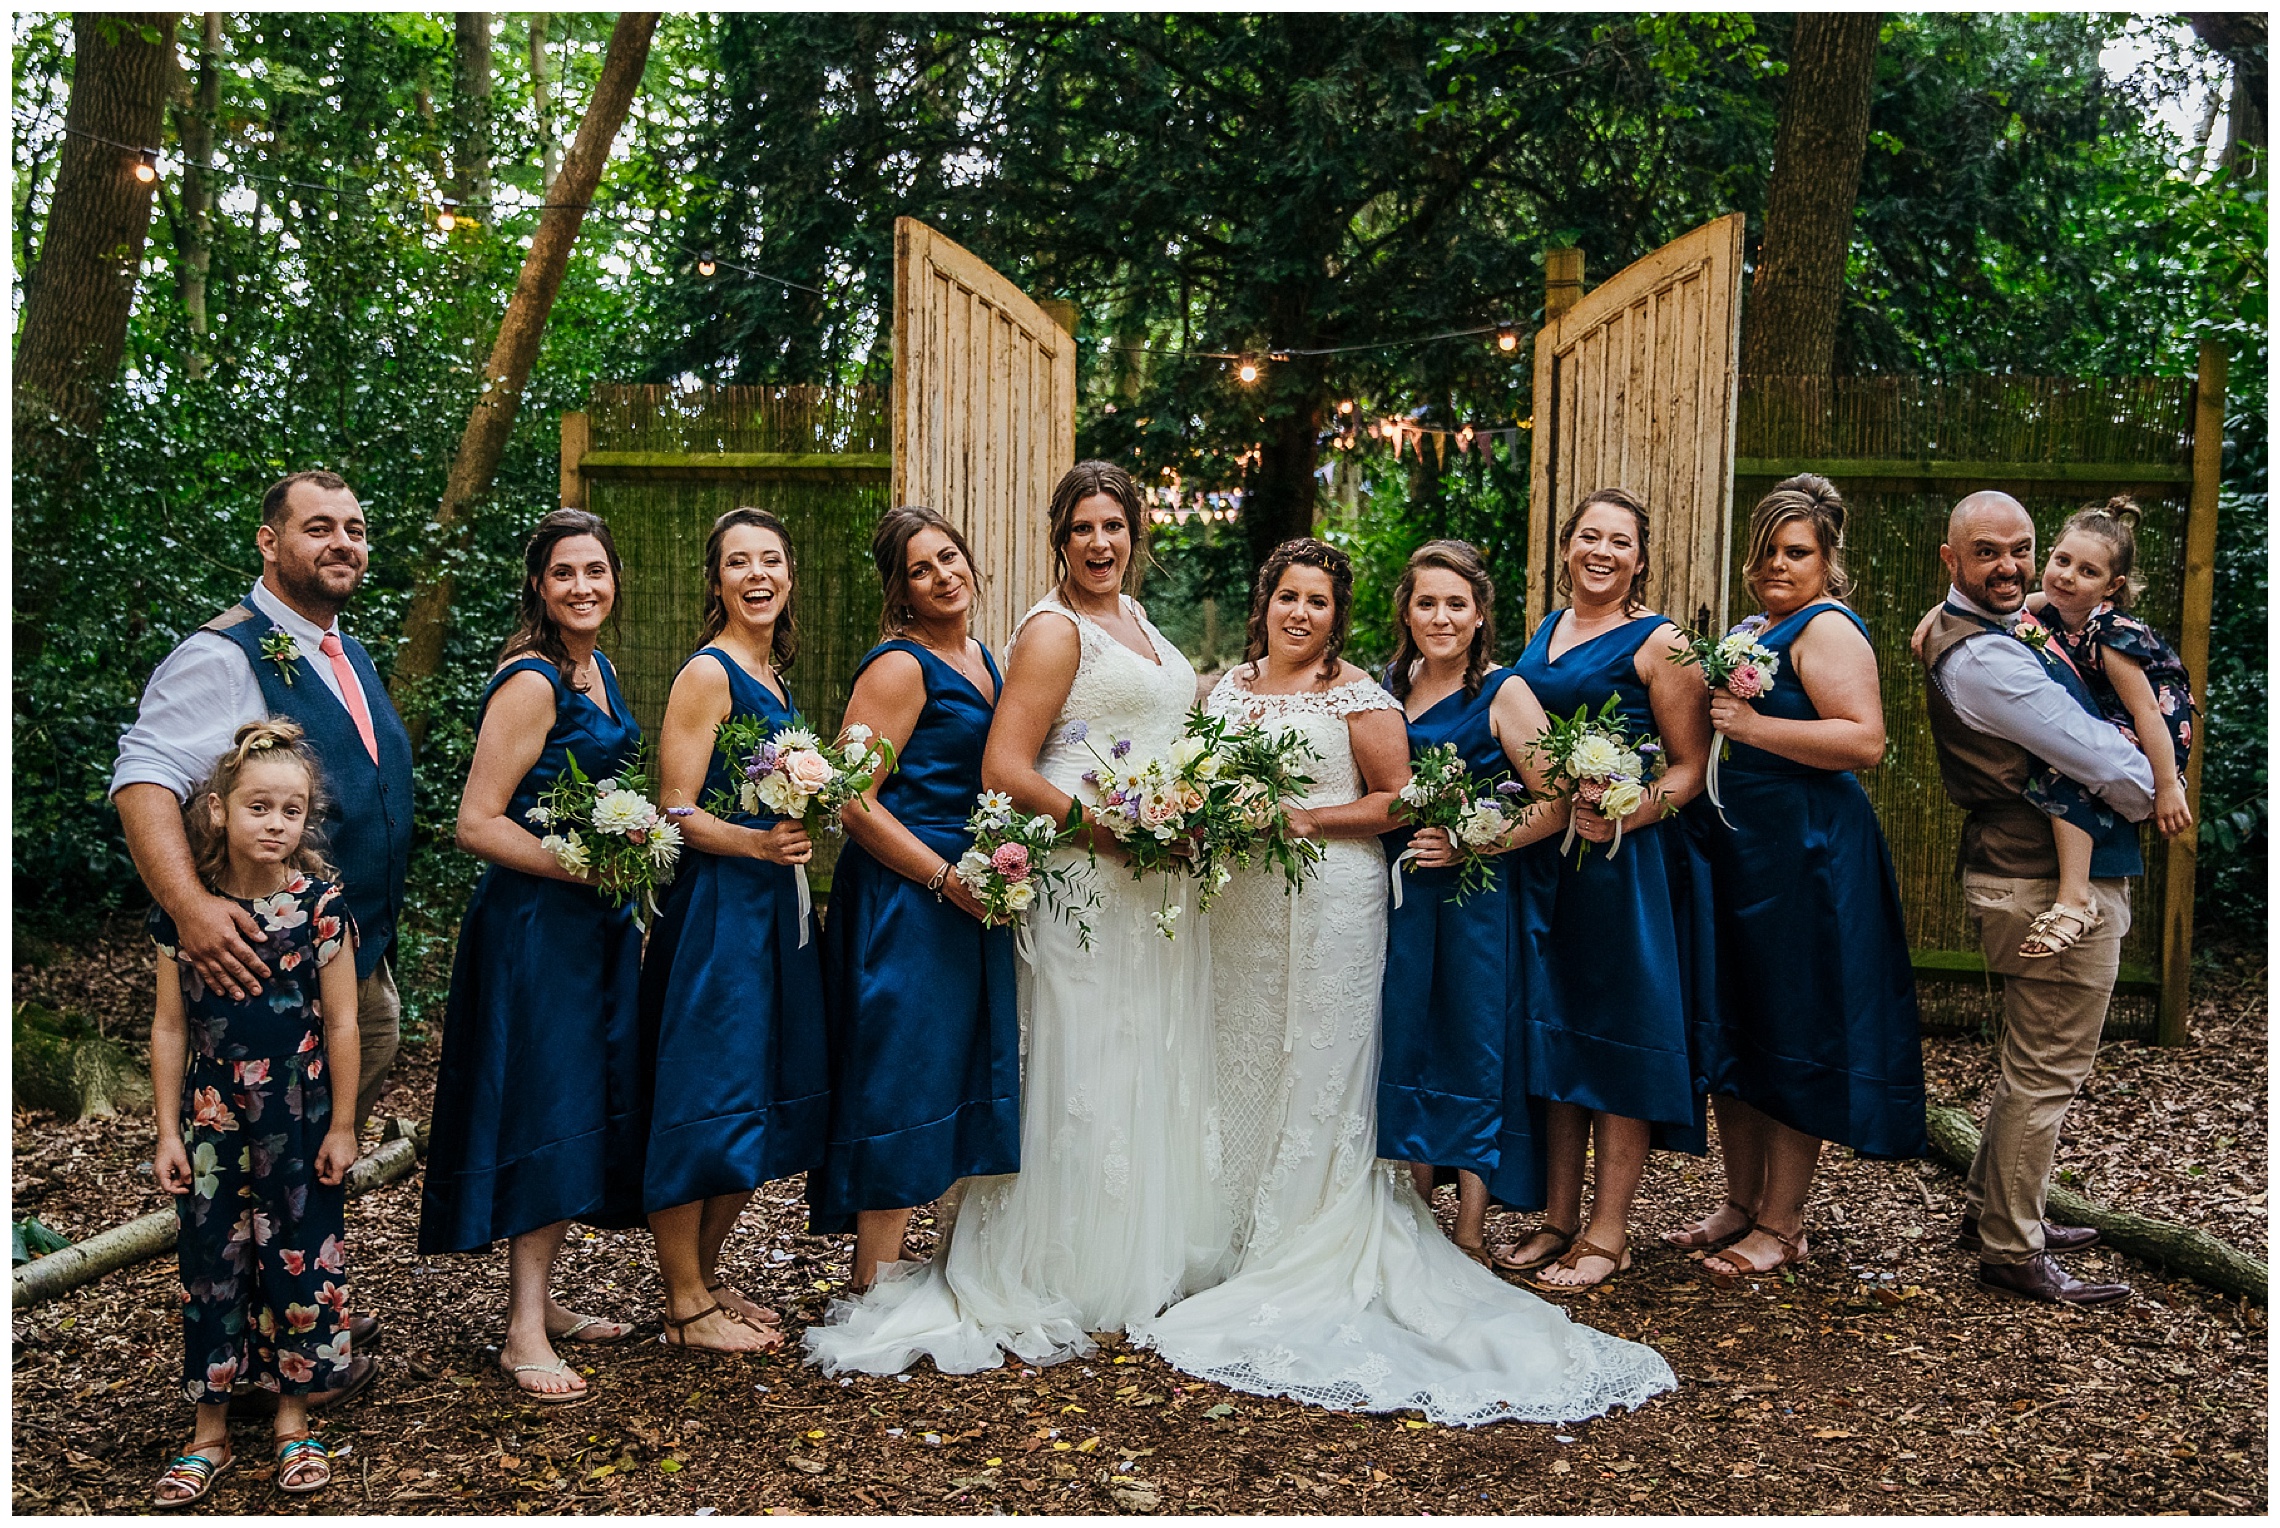 brides and their bridesmaids in calf midi length blue dresses